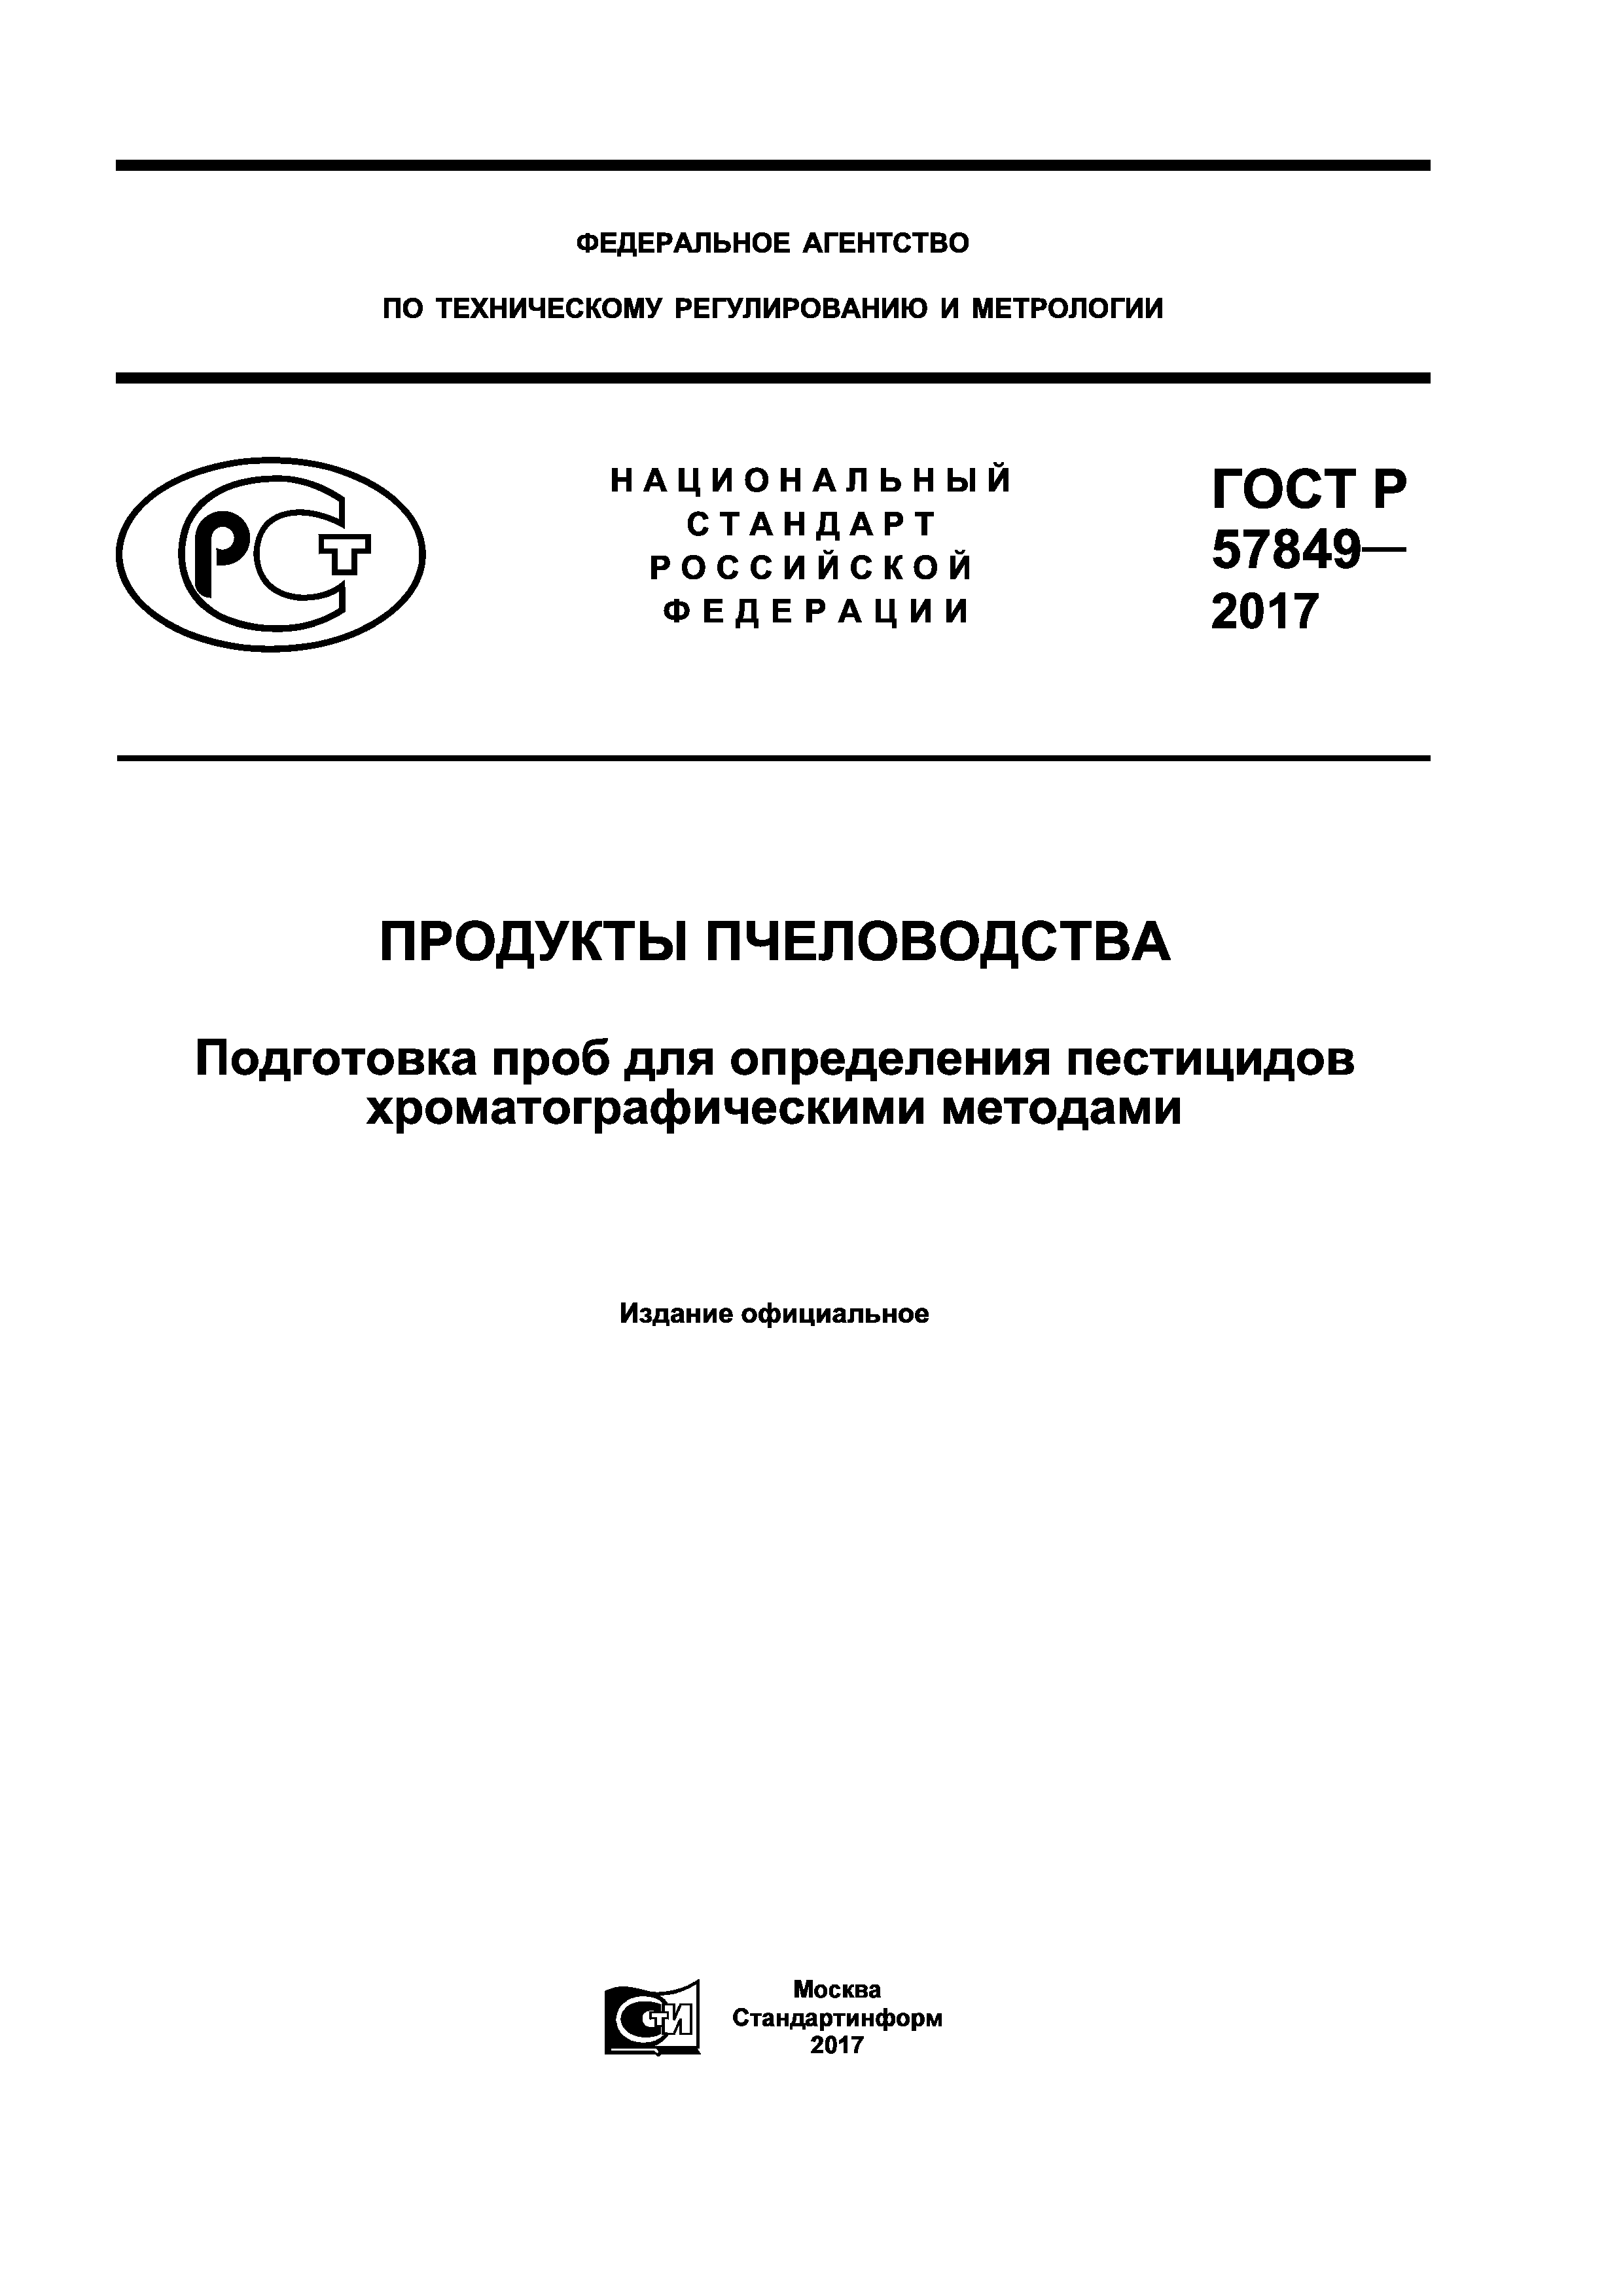 ГОСТ Р 57849-2017